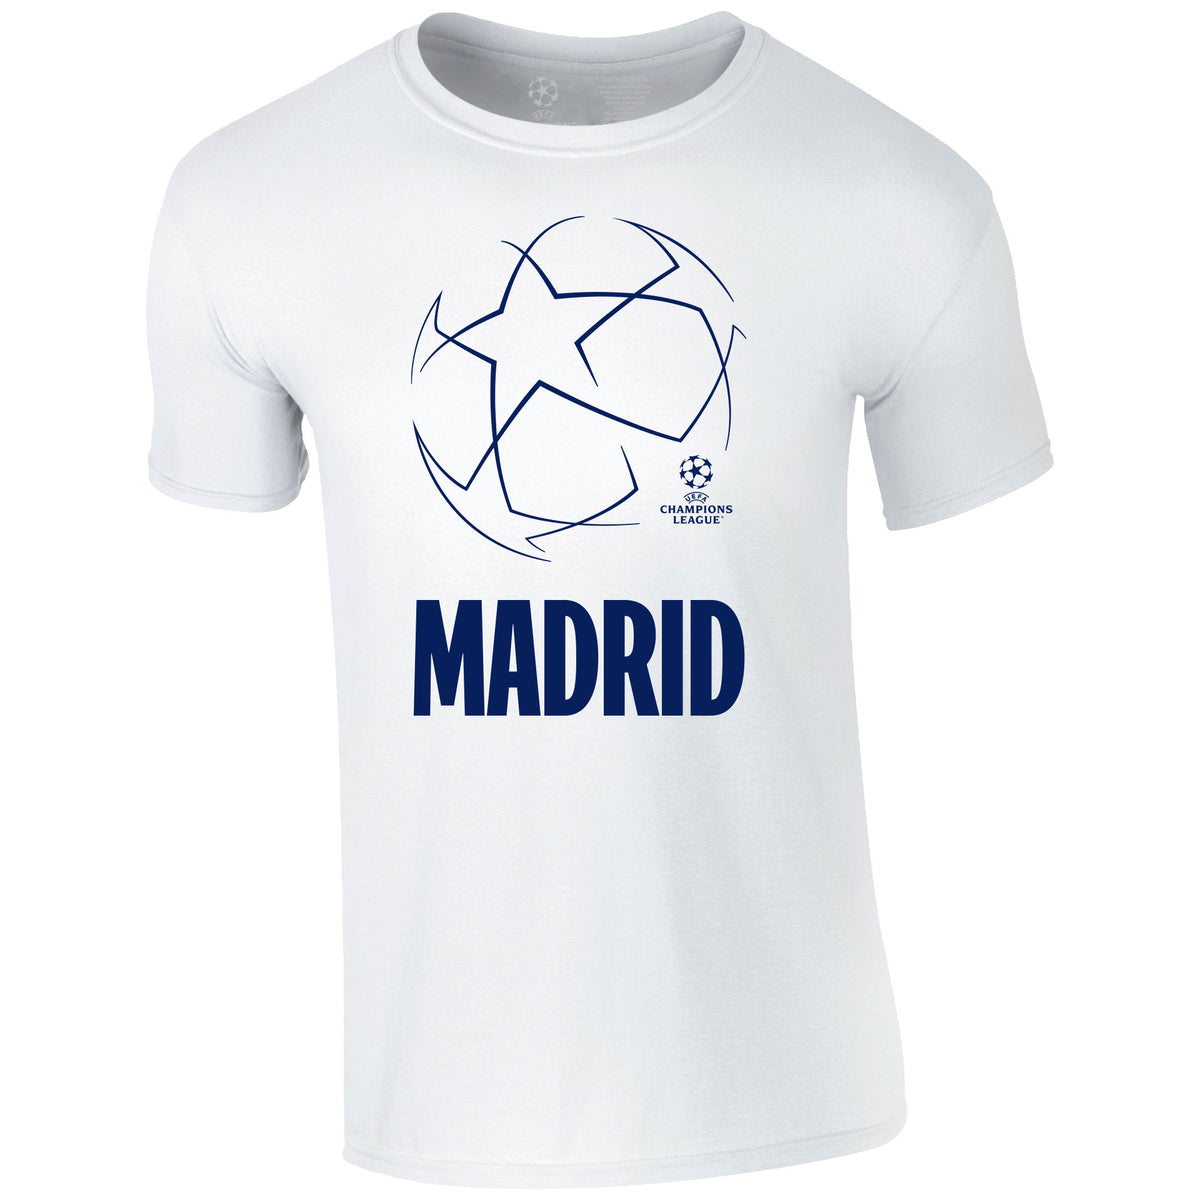 Champions League Starball Madrid City T-Shirt White